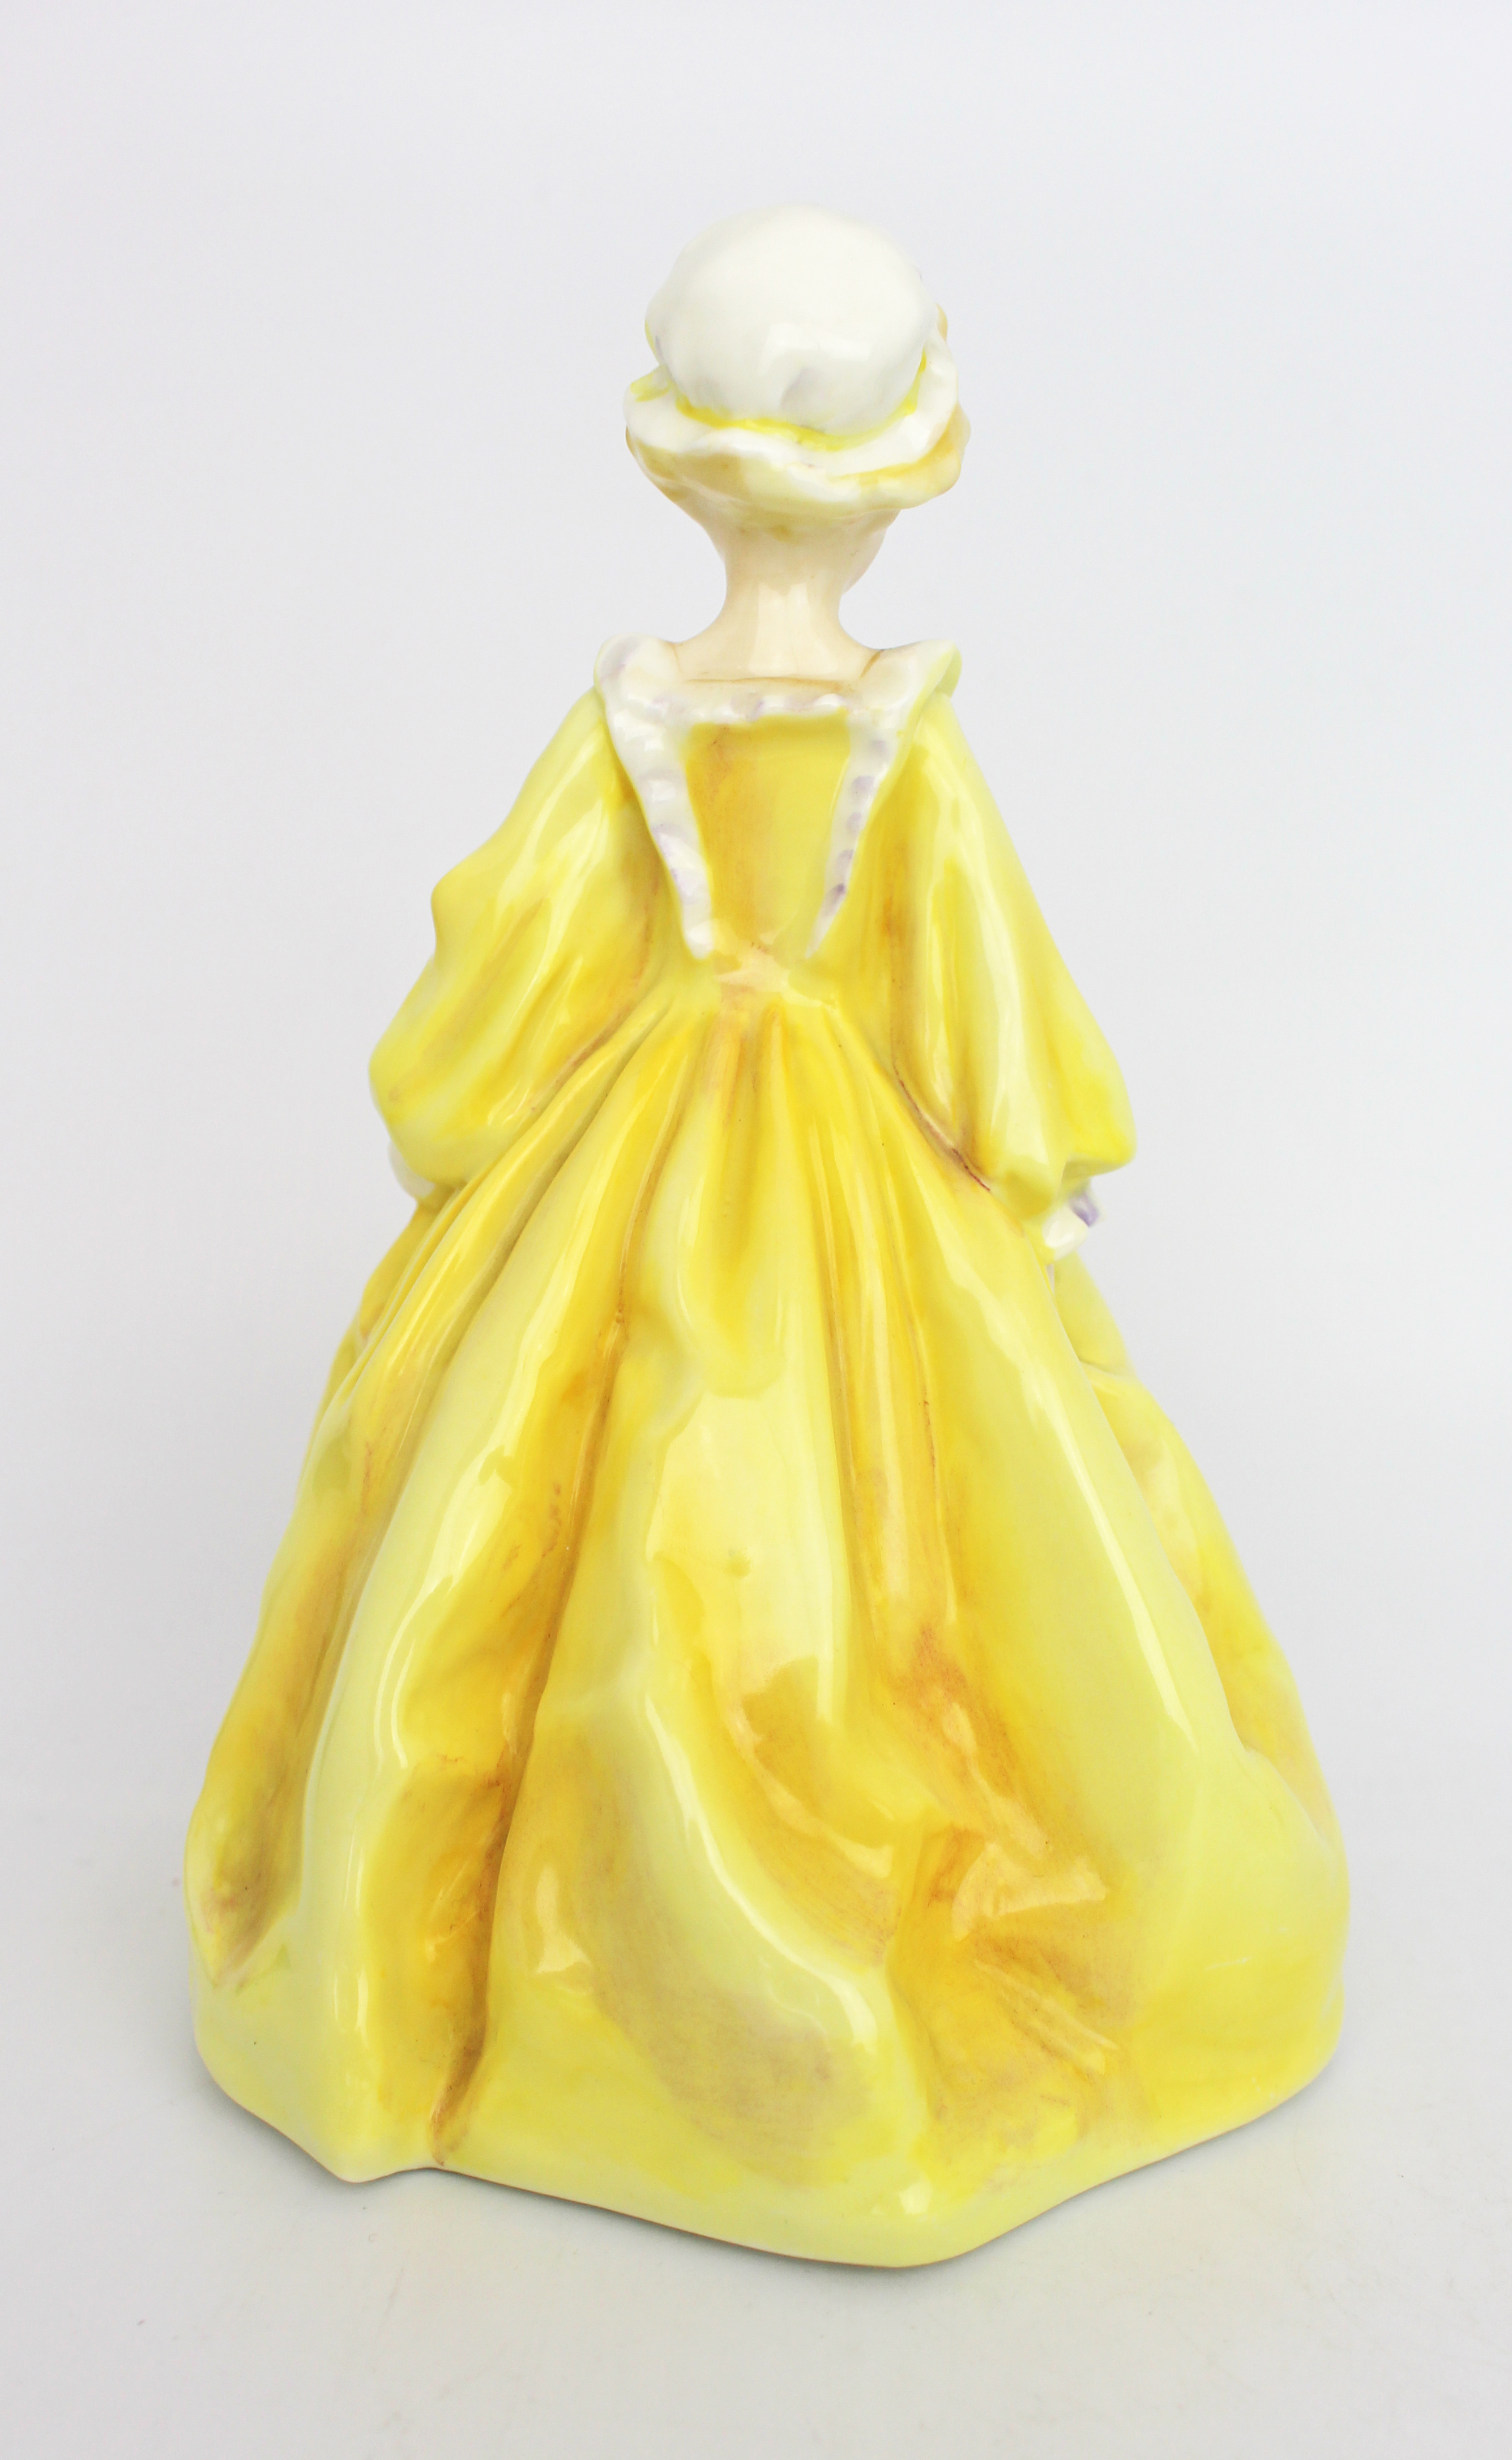 Royal Worcester Figurine Yellow Grandmothers Dress - Image 2 of 3